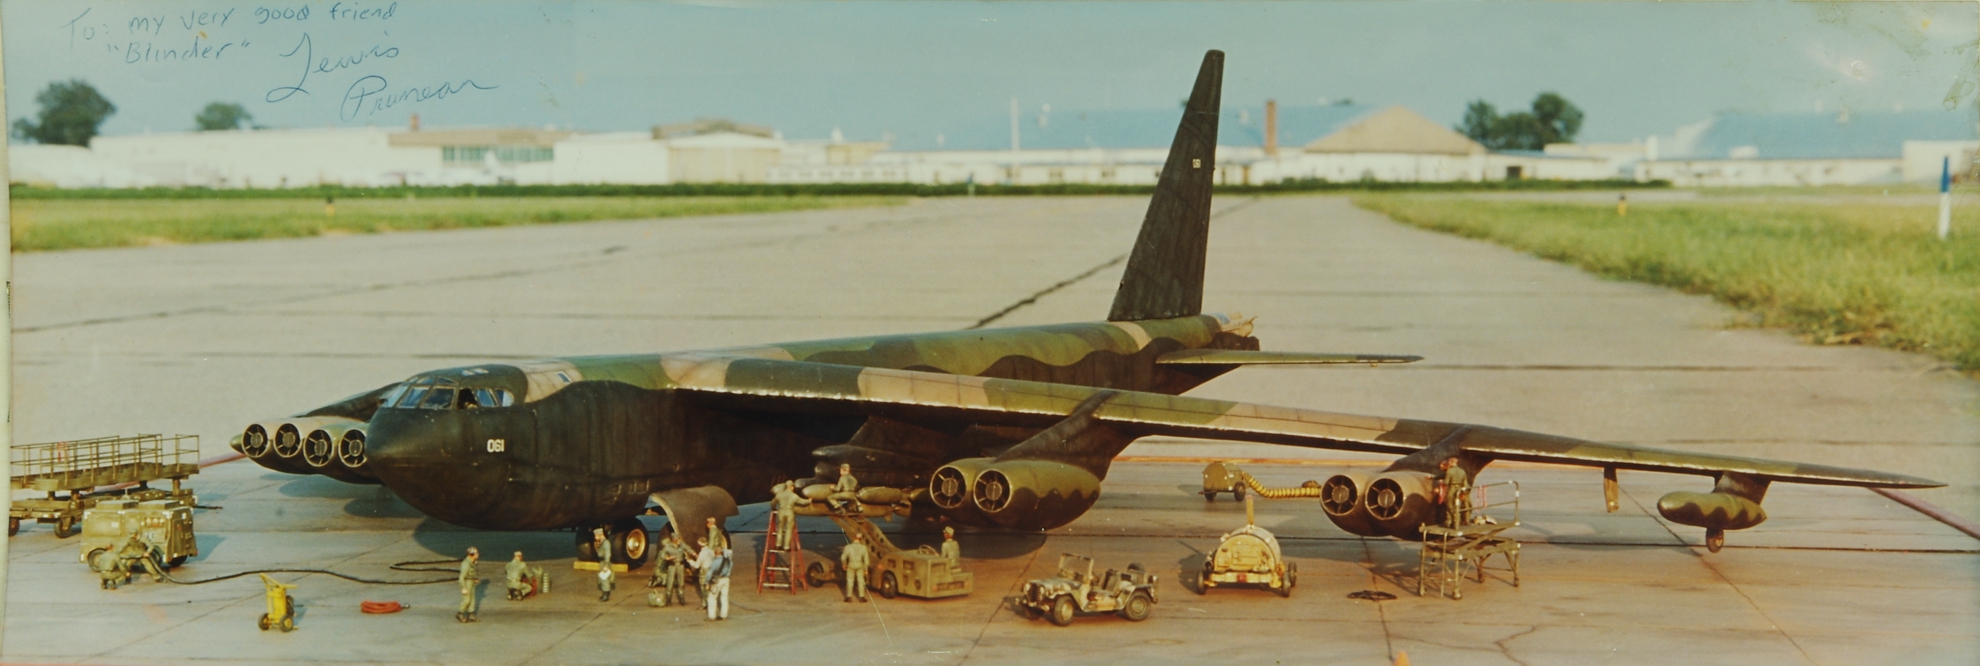 Lewis B-52 diorama.jpg